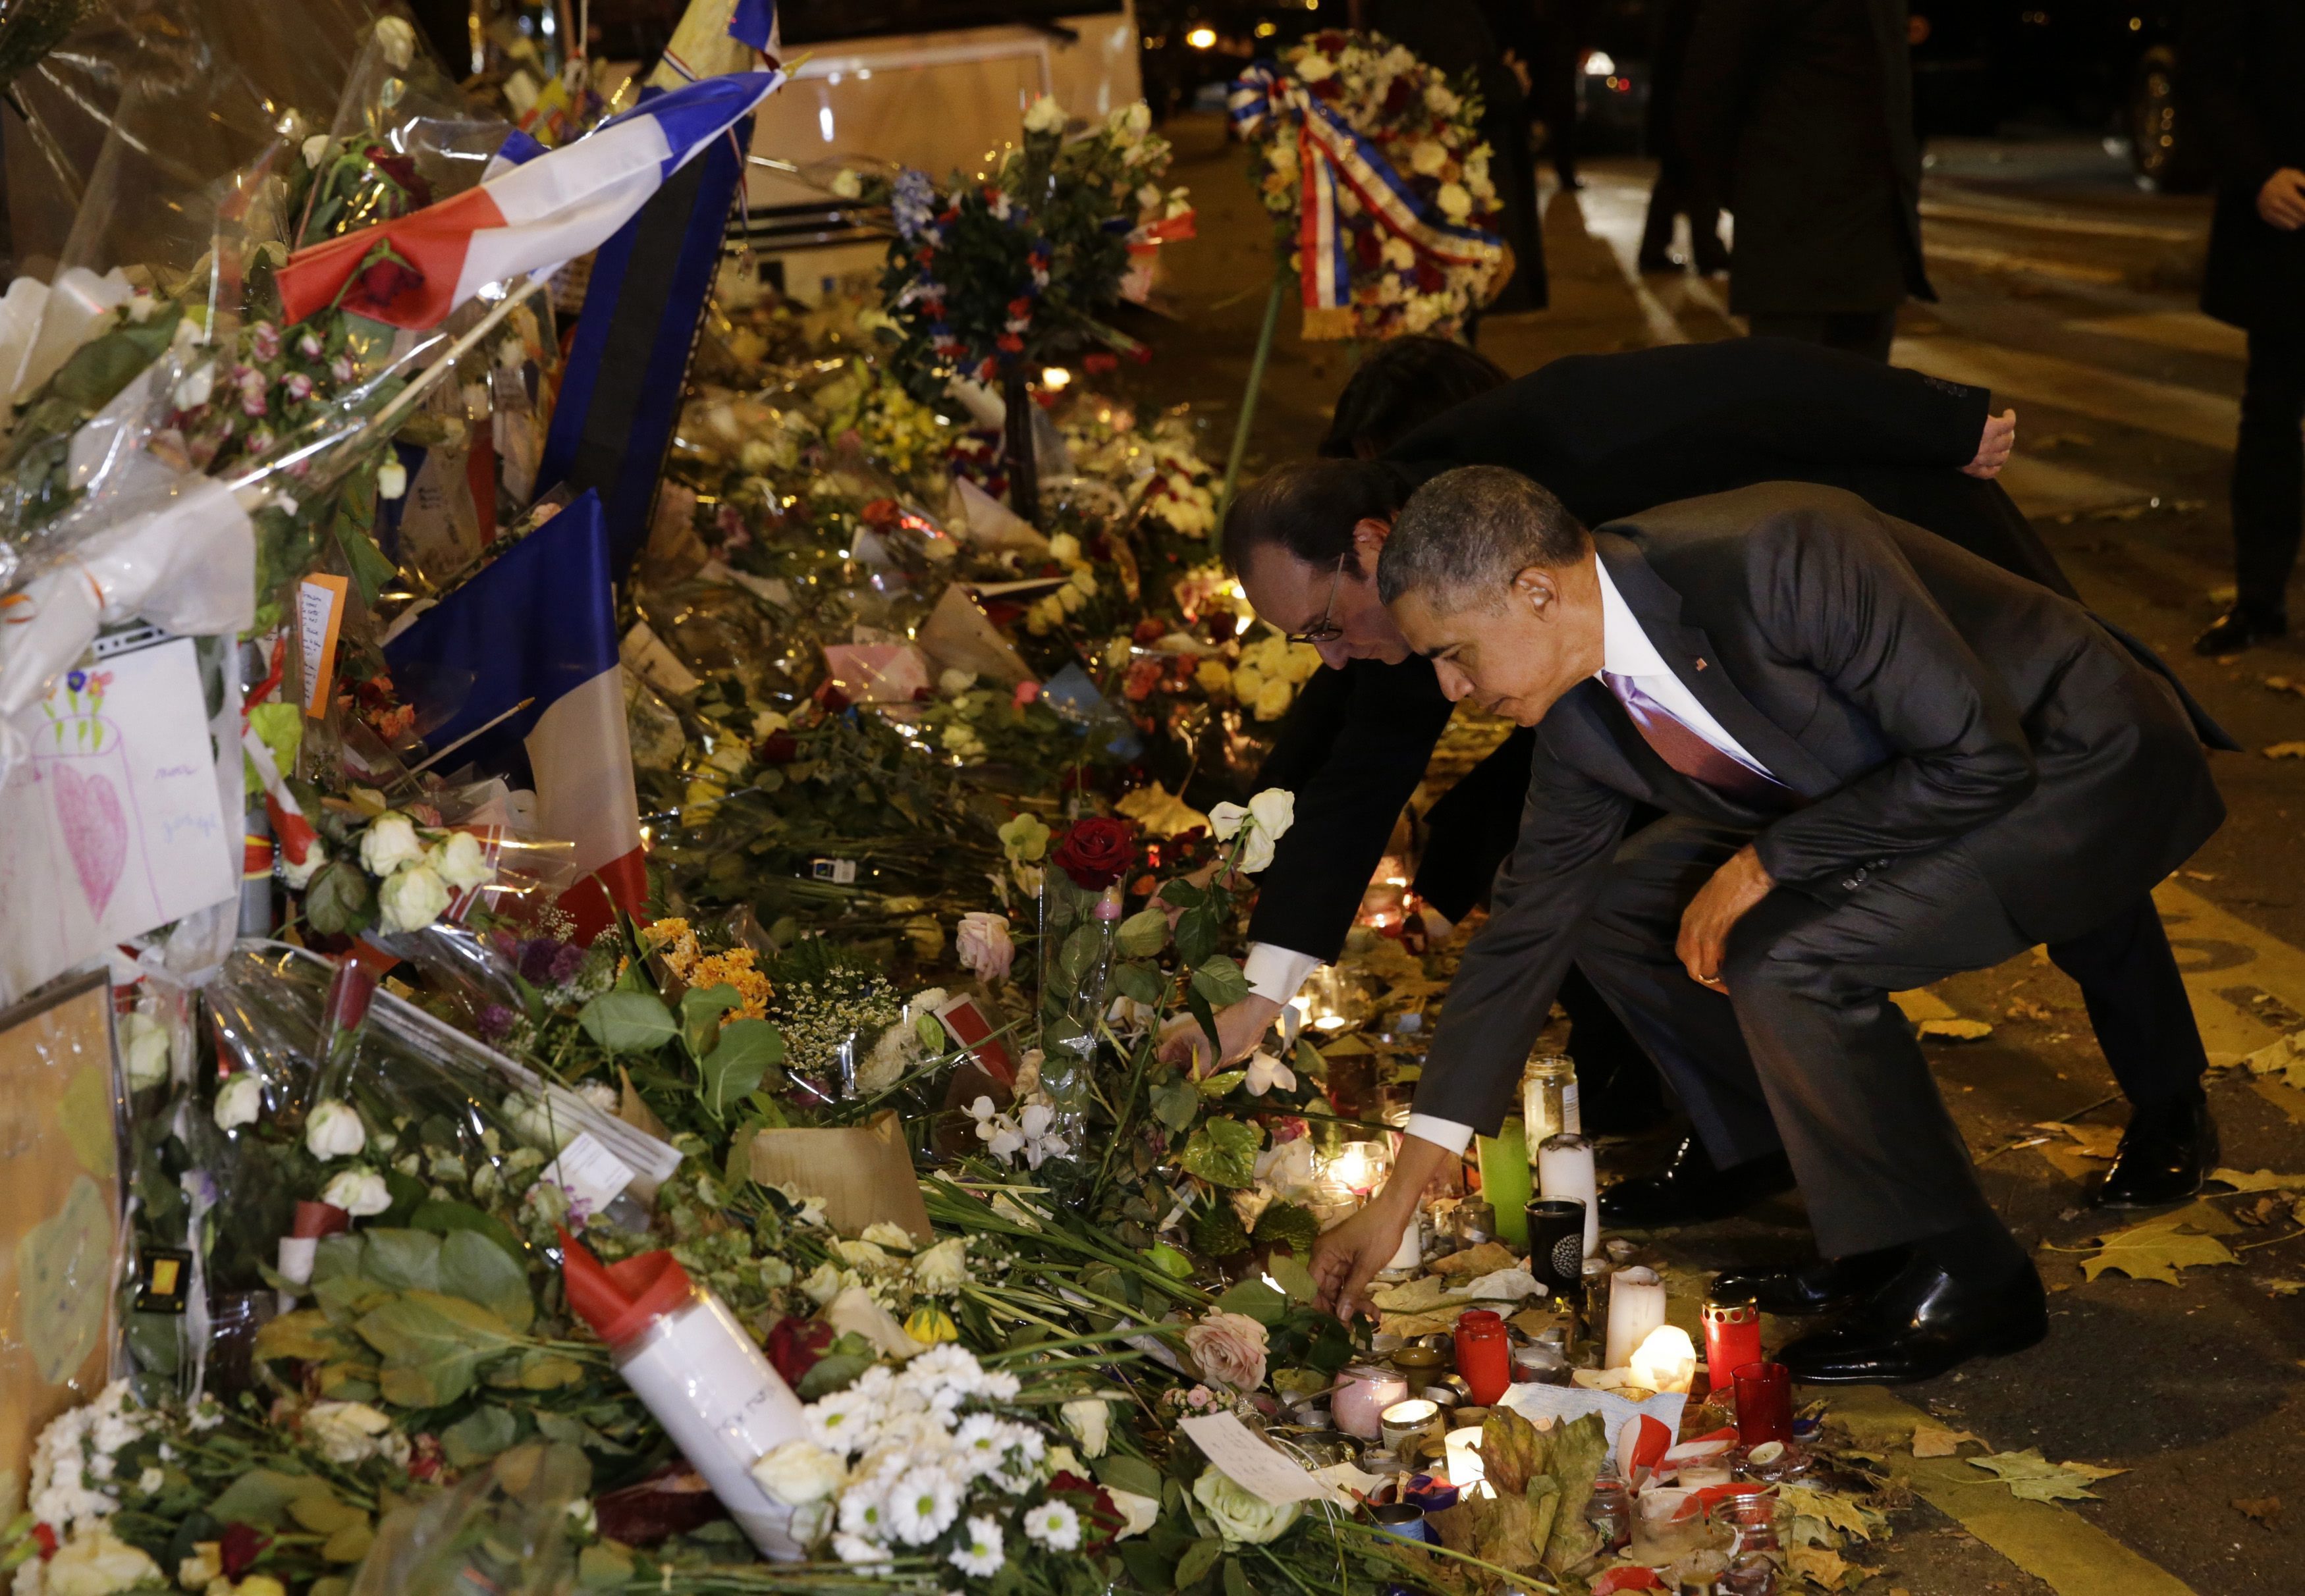 Omagiu adus de presedintii Barack Obama si Francois Hollande: cei doi au depus flori in fata salii Bataclan